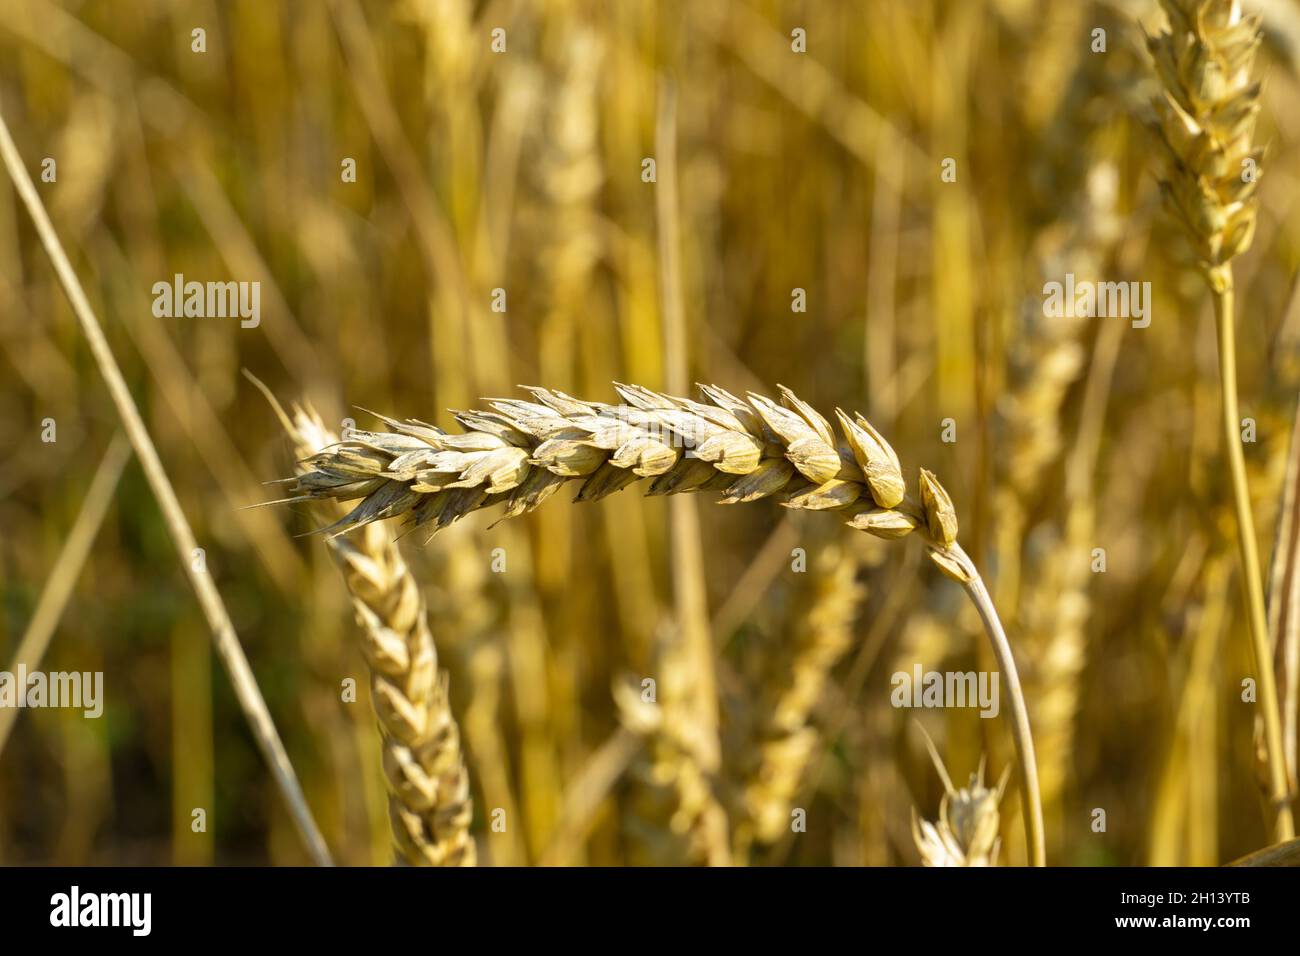 Wheat ear ready for harvesting. Stock Photo